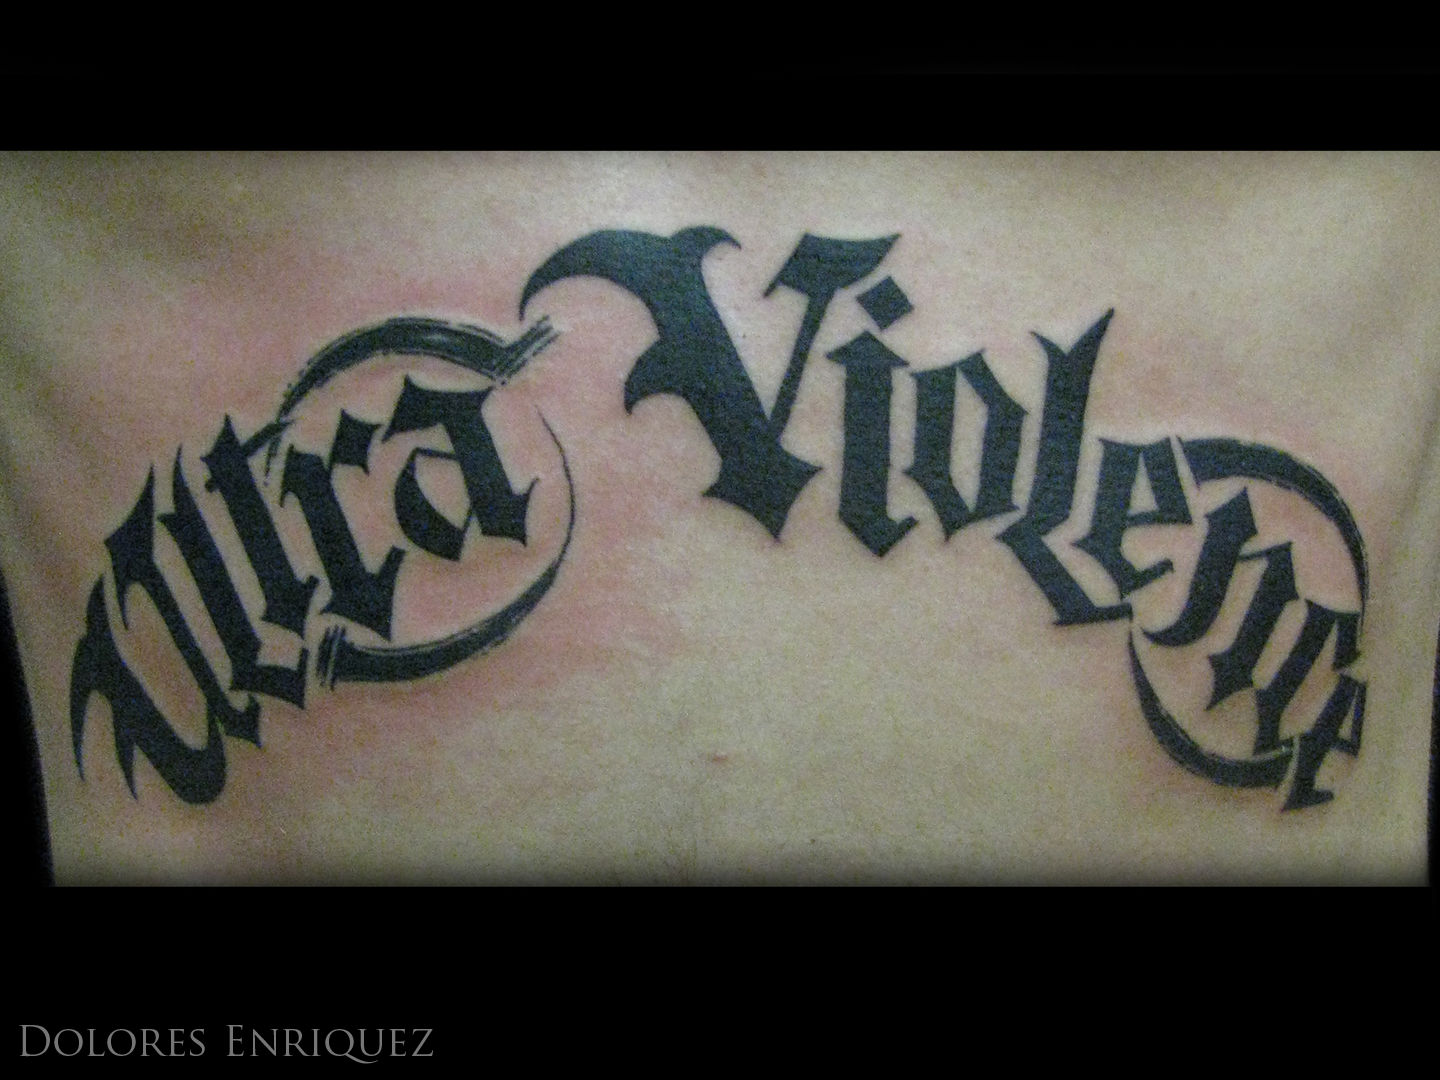 Latest Ultra violence Tattoos | Find Ultra violence Tattoos